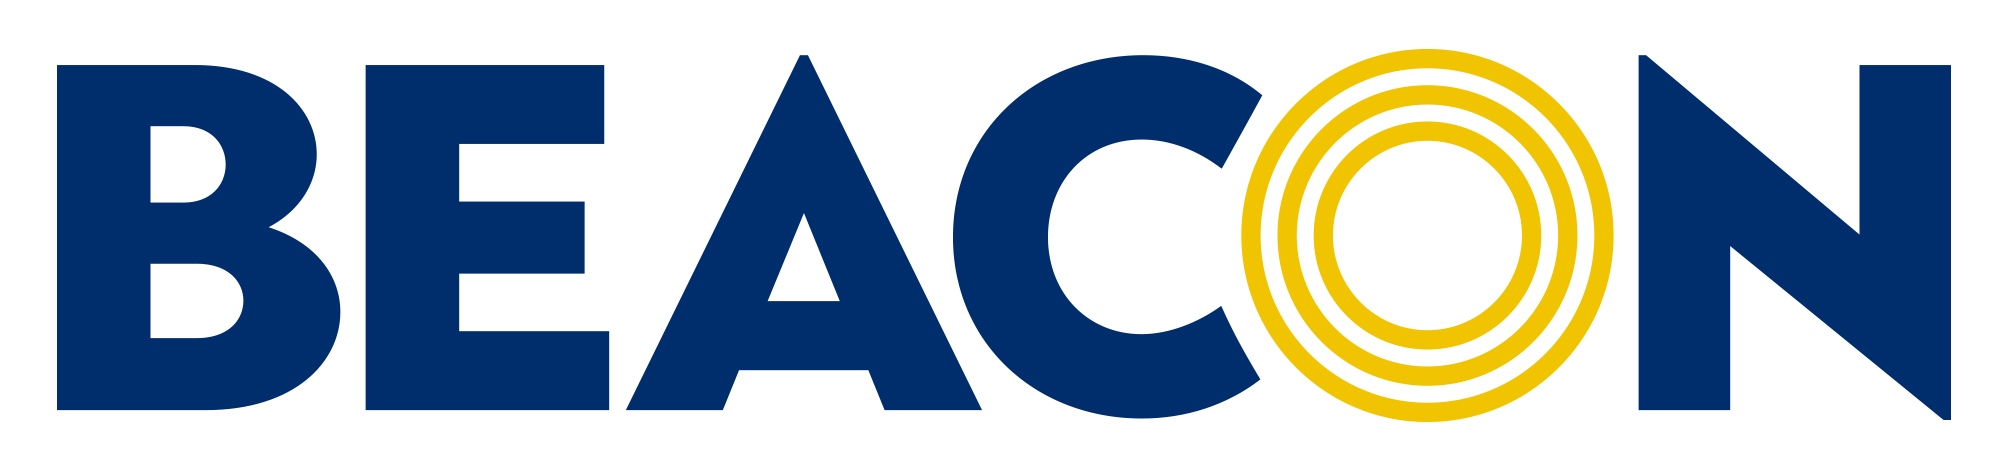 Beacon Beach Allert Logo Vector Elegant Stock Vector (Royalty Free)  2192110959 | Shutterstock